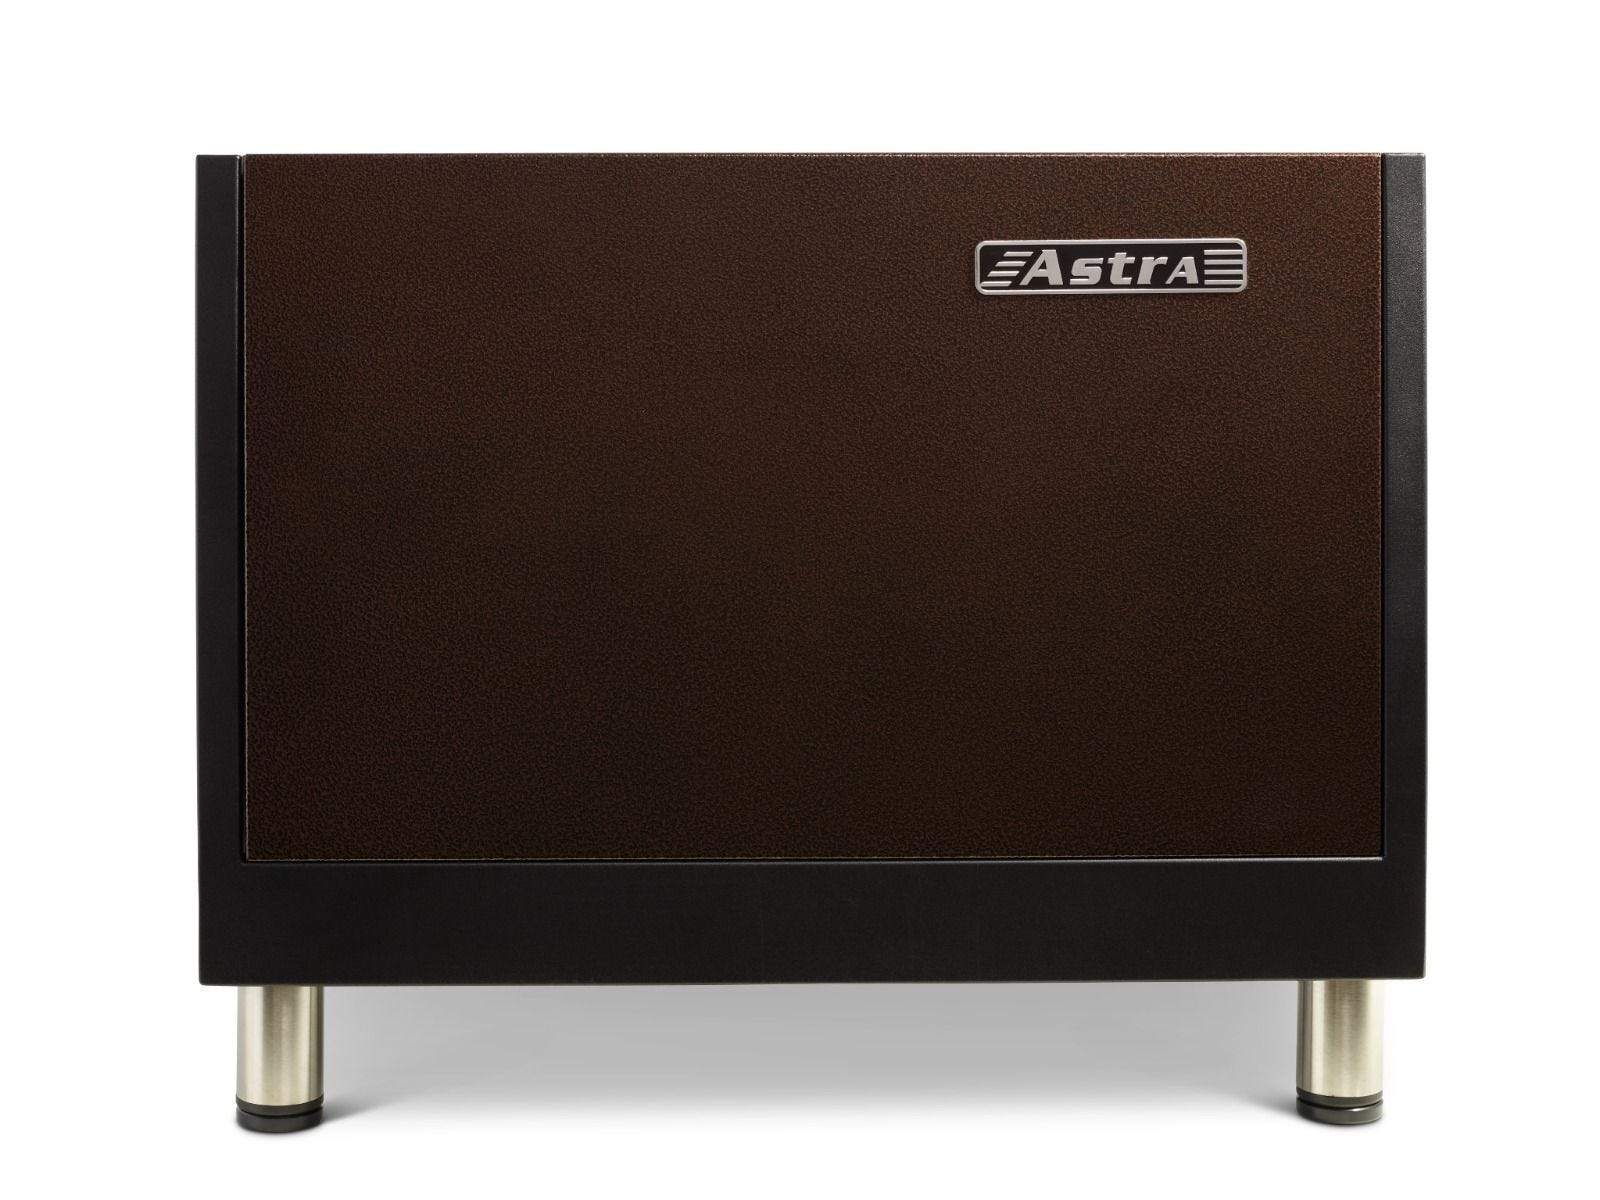 Astra Espresso Machines Astra MEGA II Automatic Espresso Machine, 220V M2-012